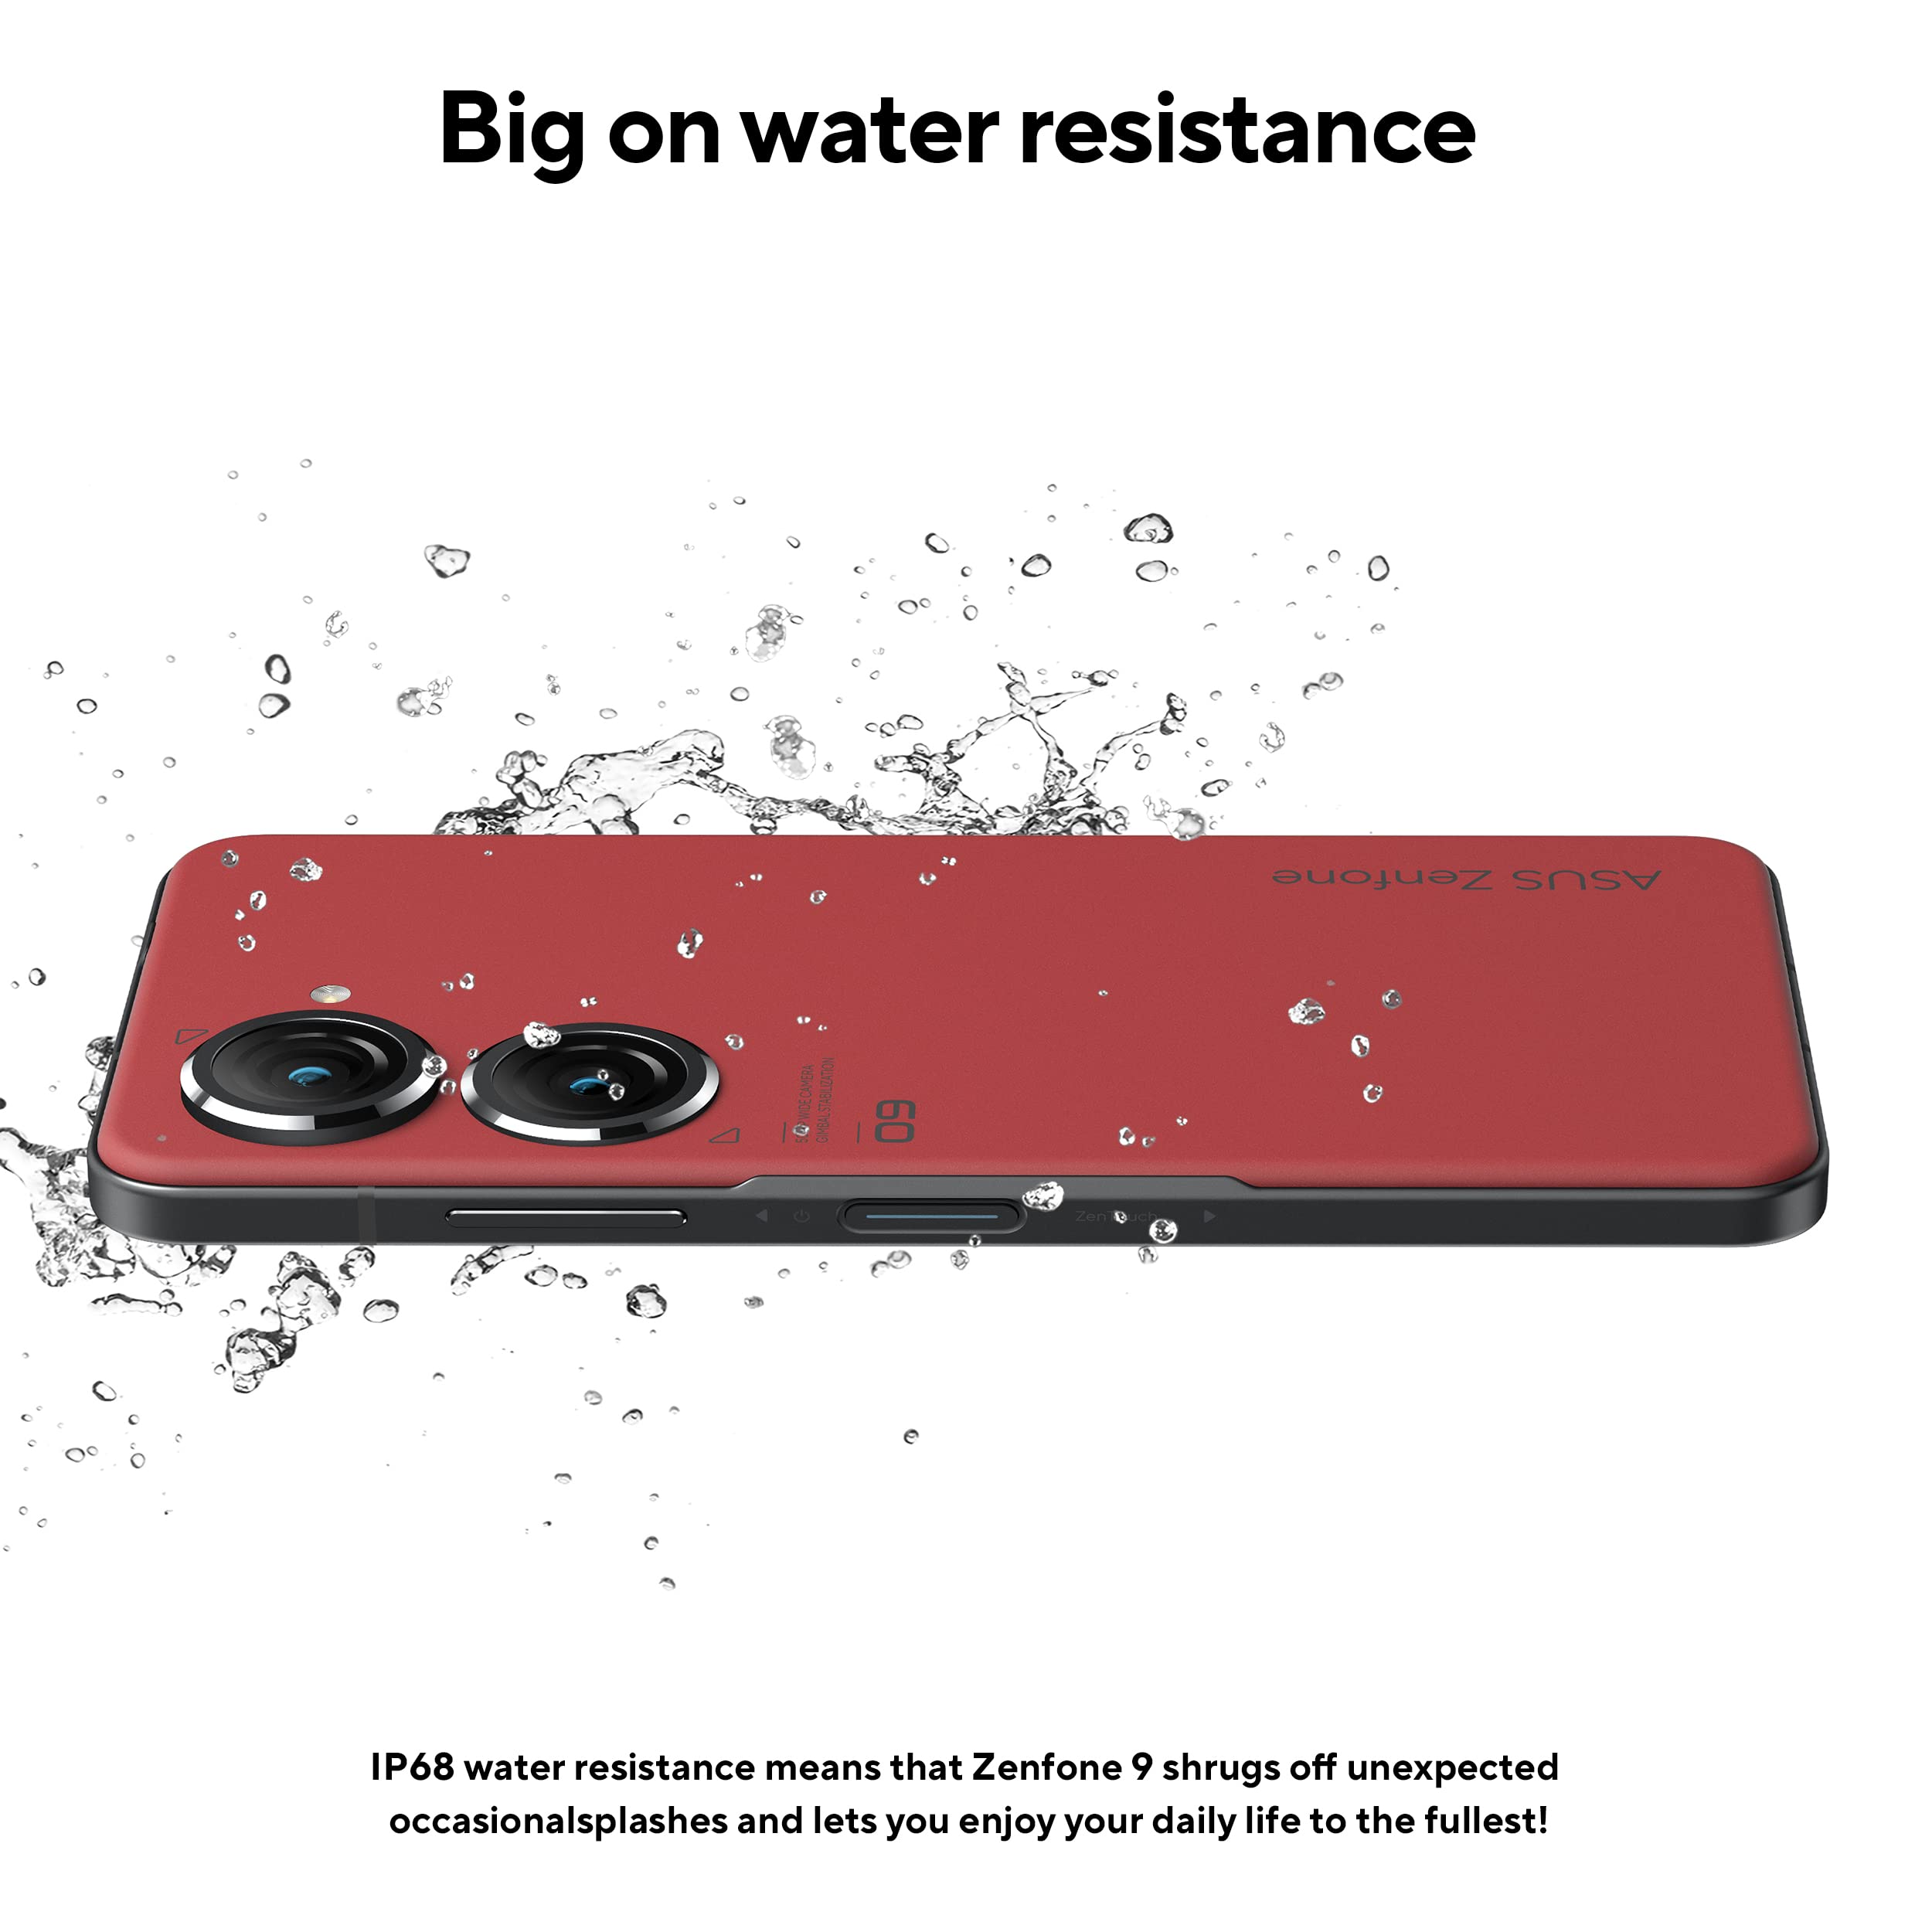 ASUS ZenFone 9 Cell Phone, 5.9” FHD+ 2400x1080 AMOLED 120Hz, IP68, 4300mAh Battery, 50MP/12MP Dual Camera, 12MP Front, 8GB RAM, 128GB, 5G LTE Unlocked Dual SIM, Red, AI2202-8G128G-RD [US Version]